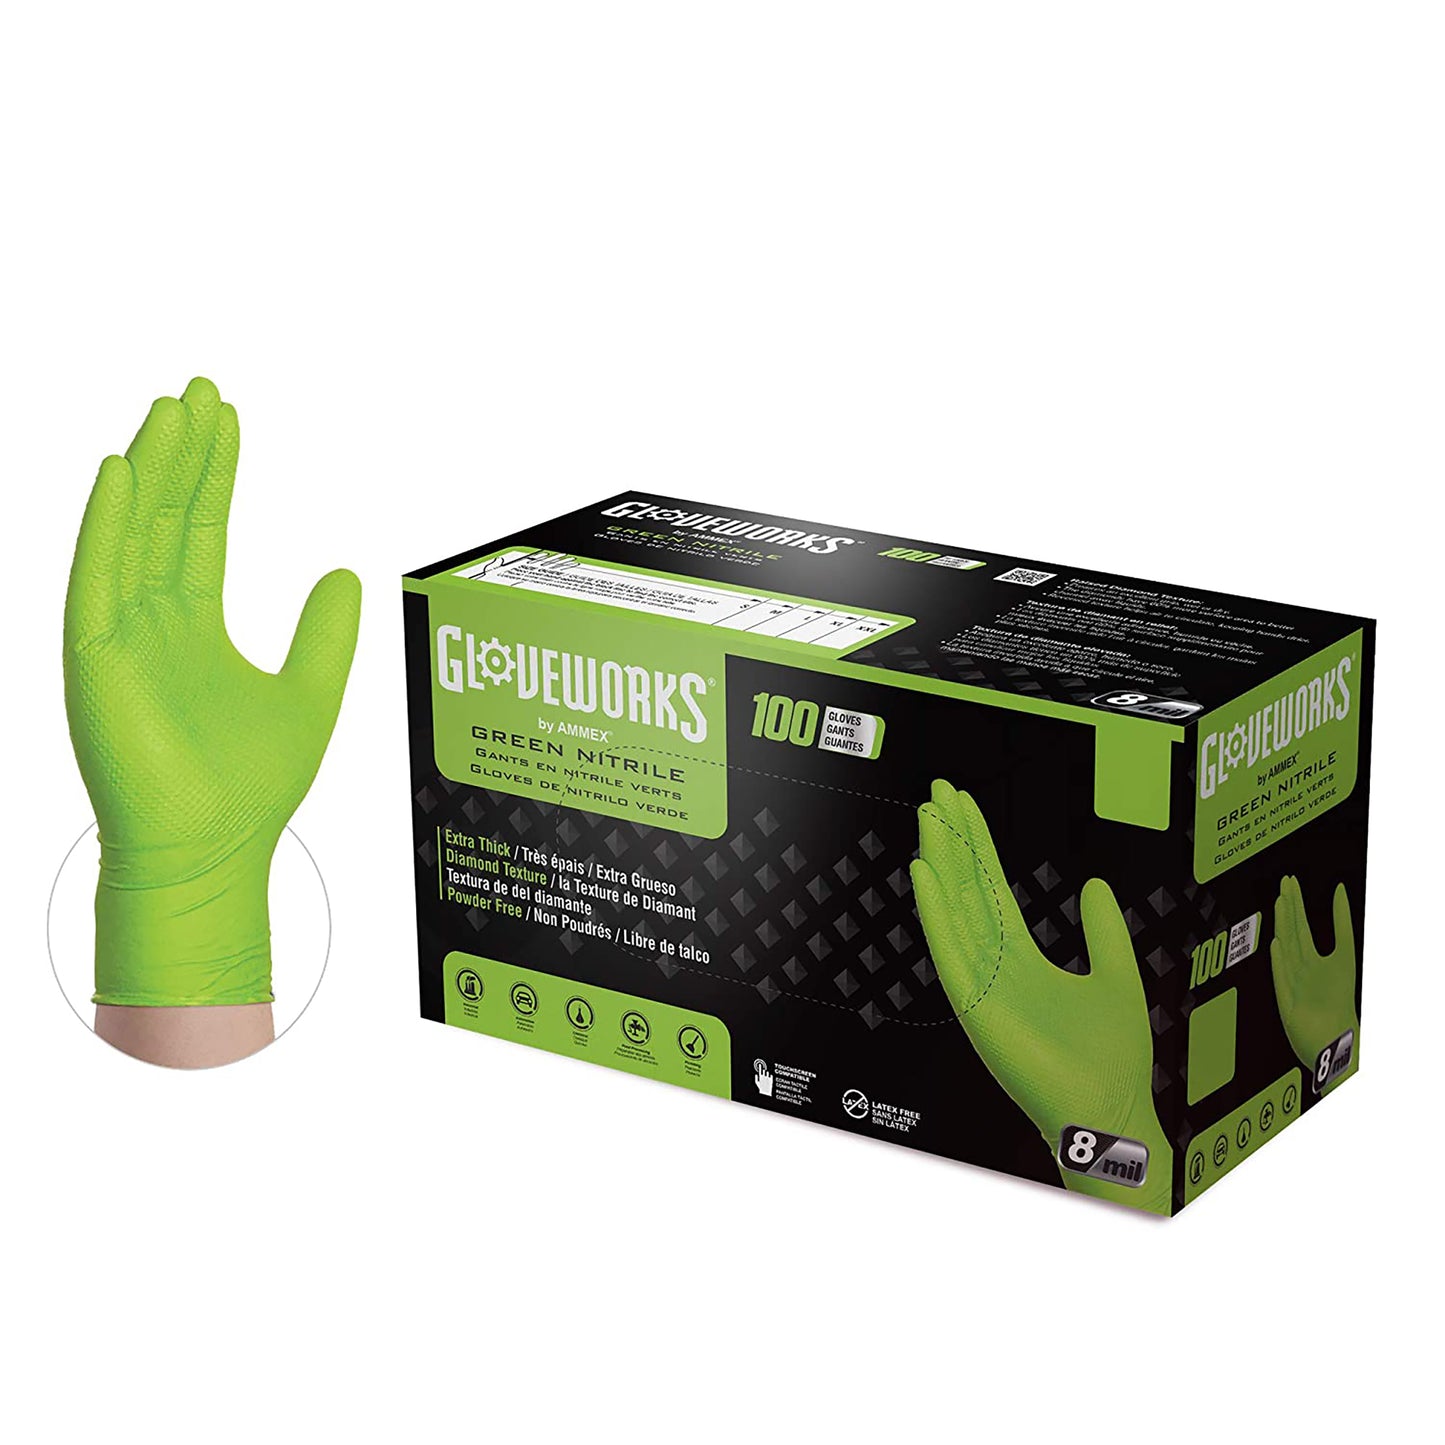 GLOVEWORK HD Green XL Nitrile 8mil Extra thick Diamond texture Powder free Gloves